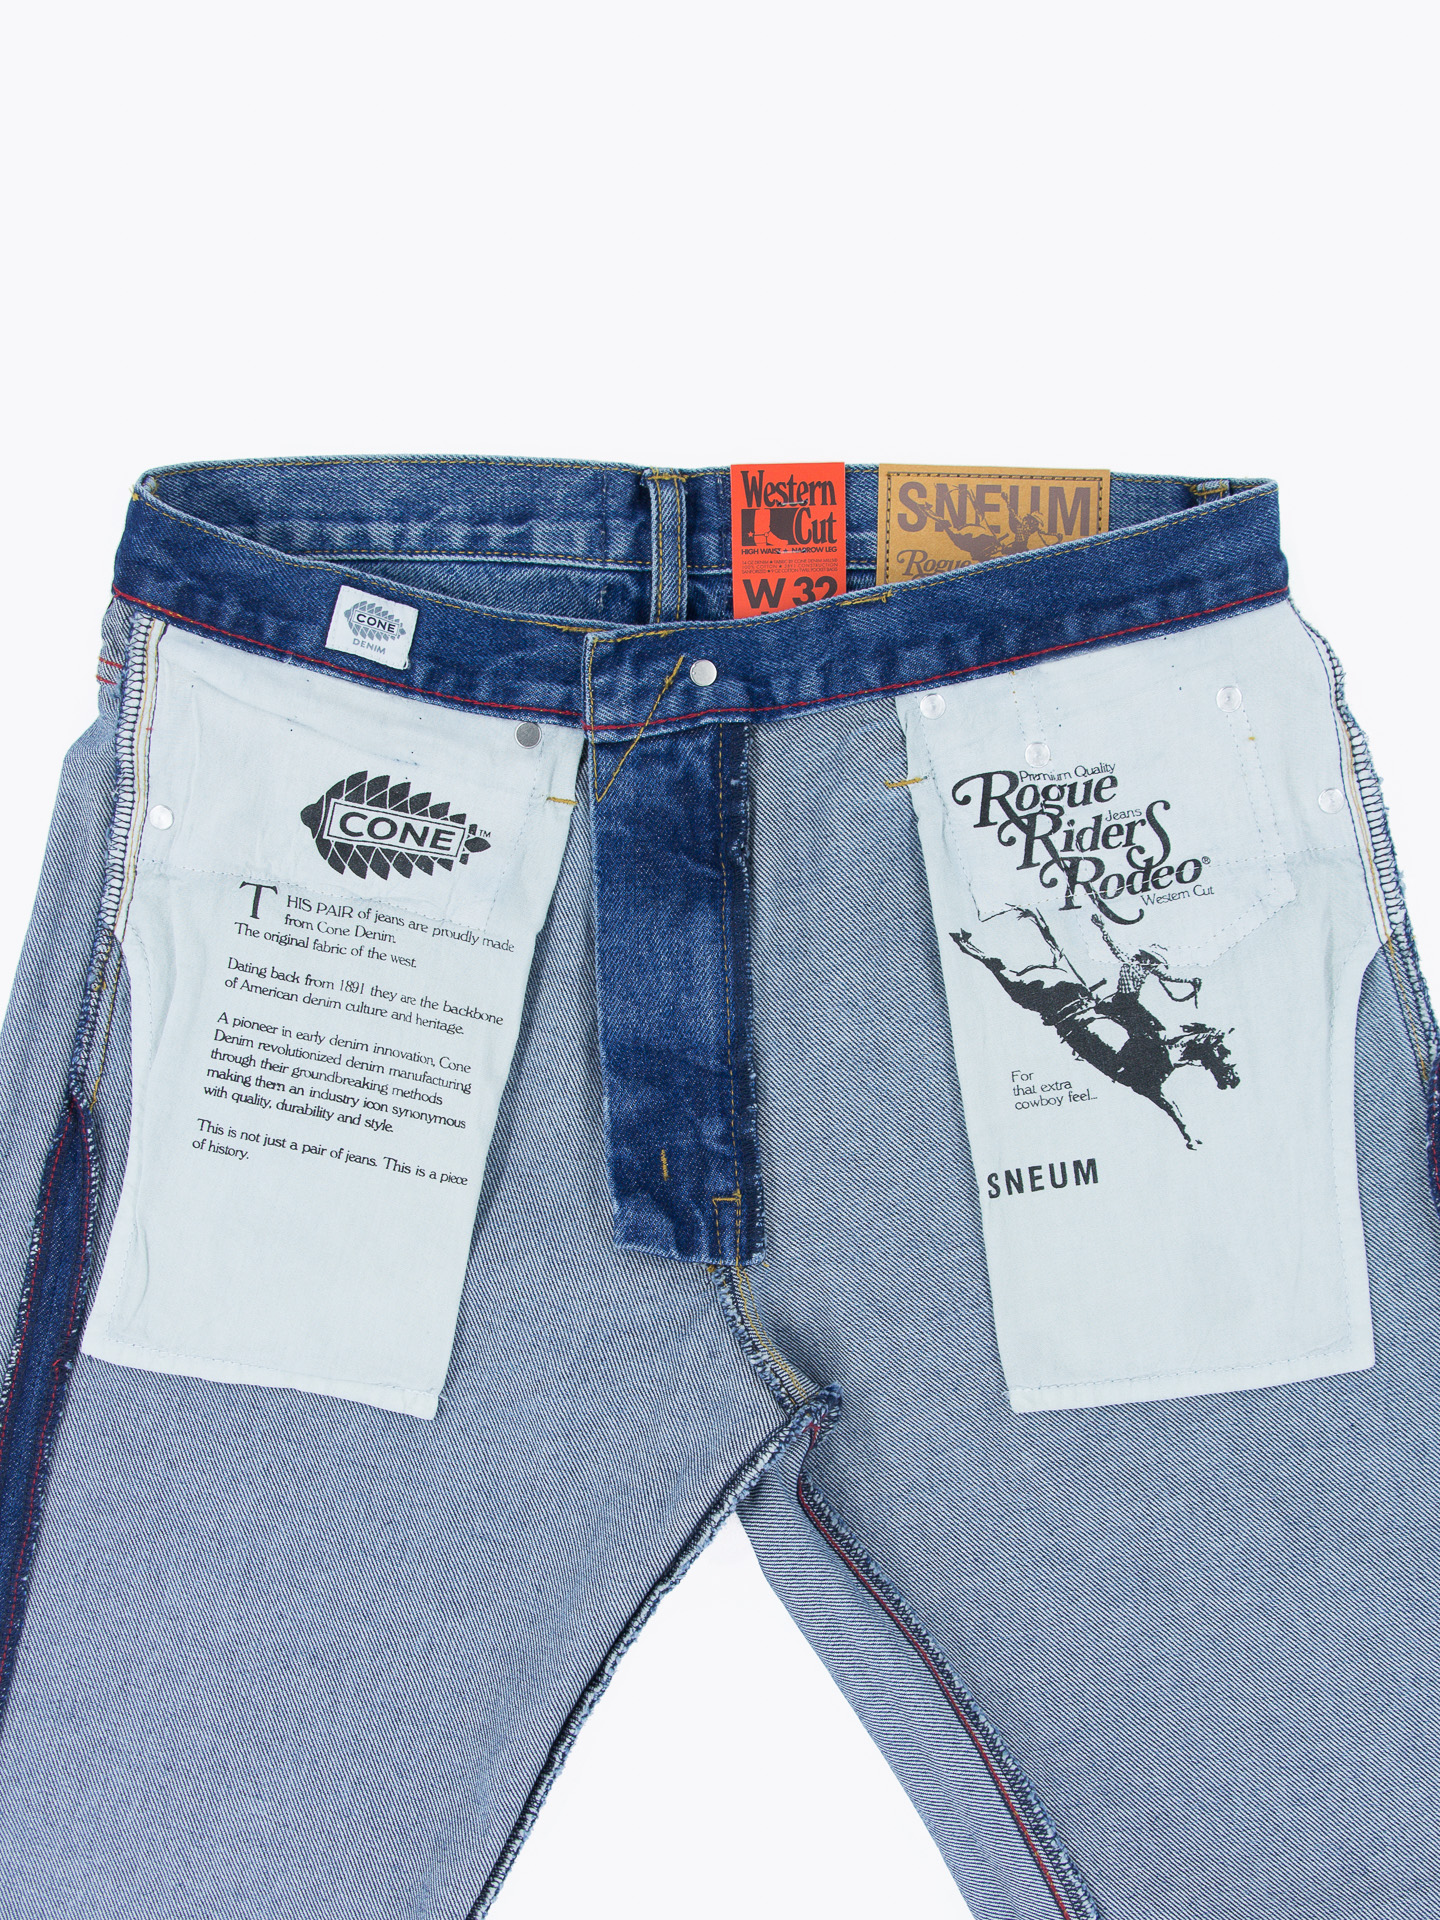 RRR Cone Denim Jeans in vintage wash - Western Cut